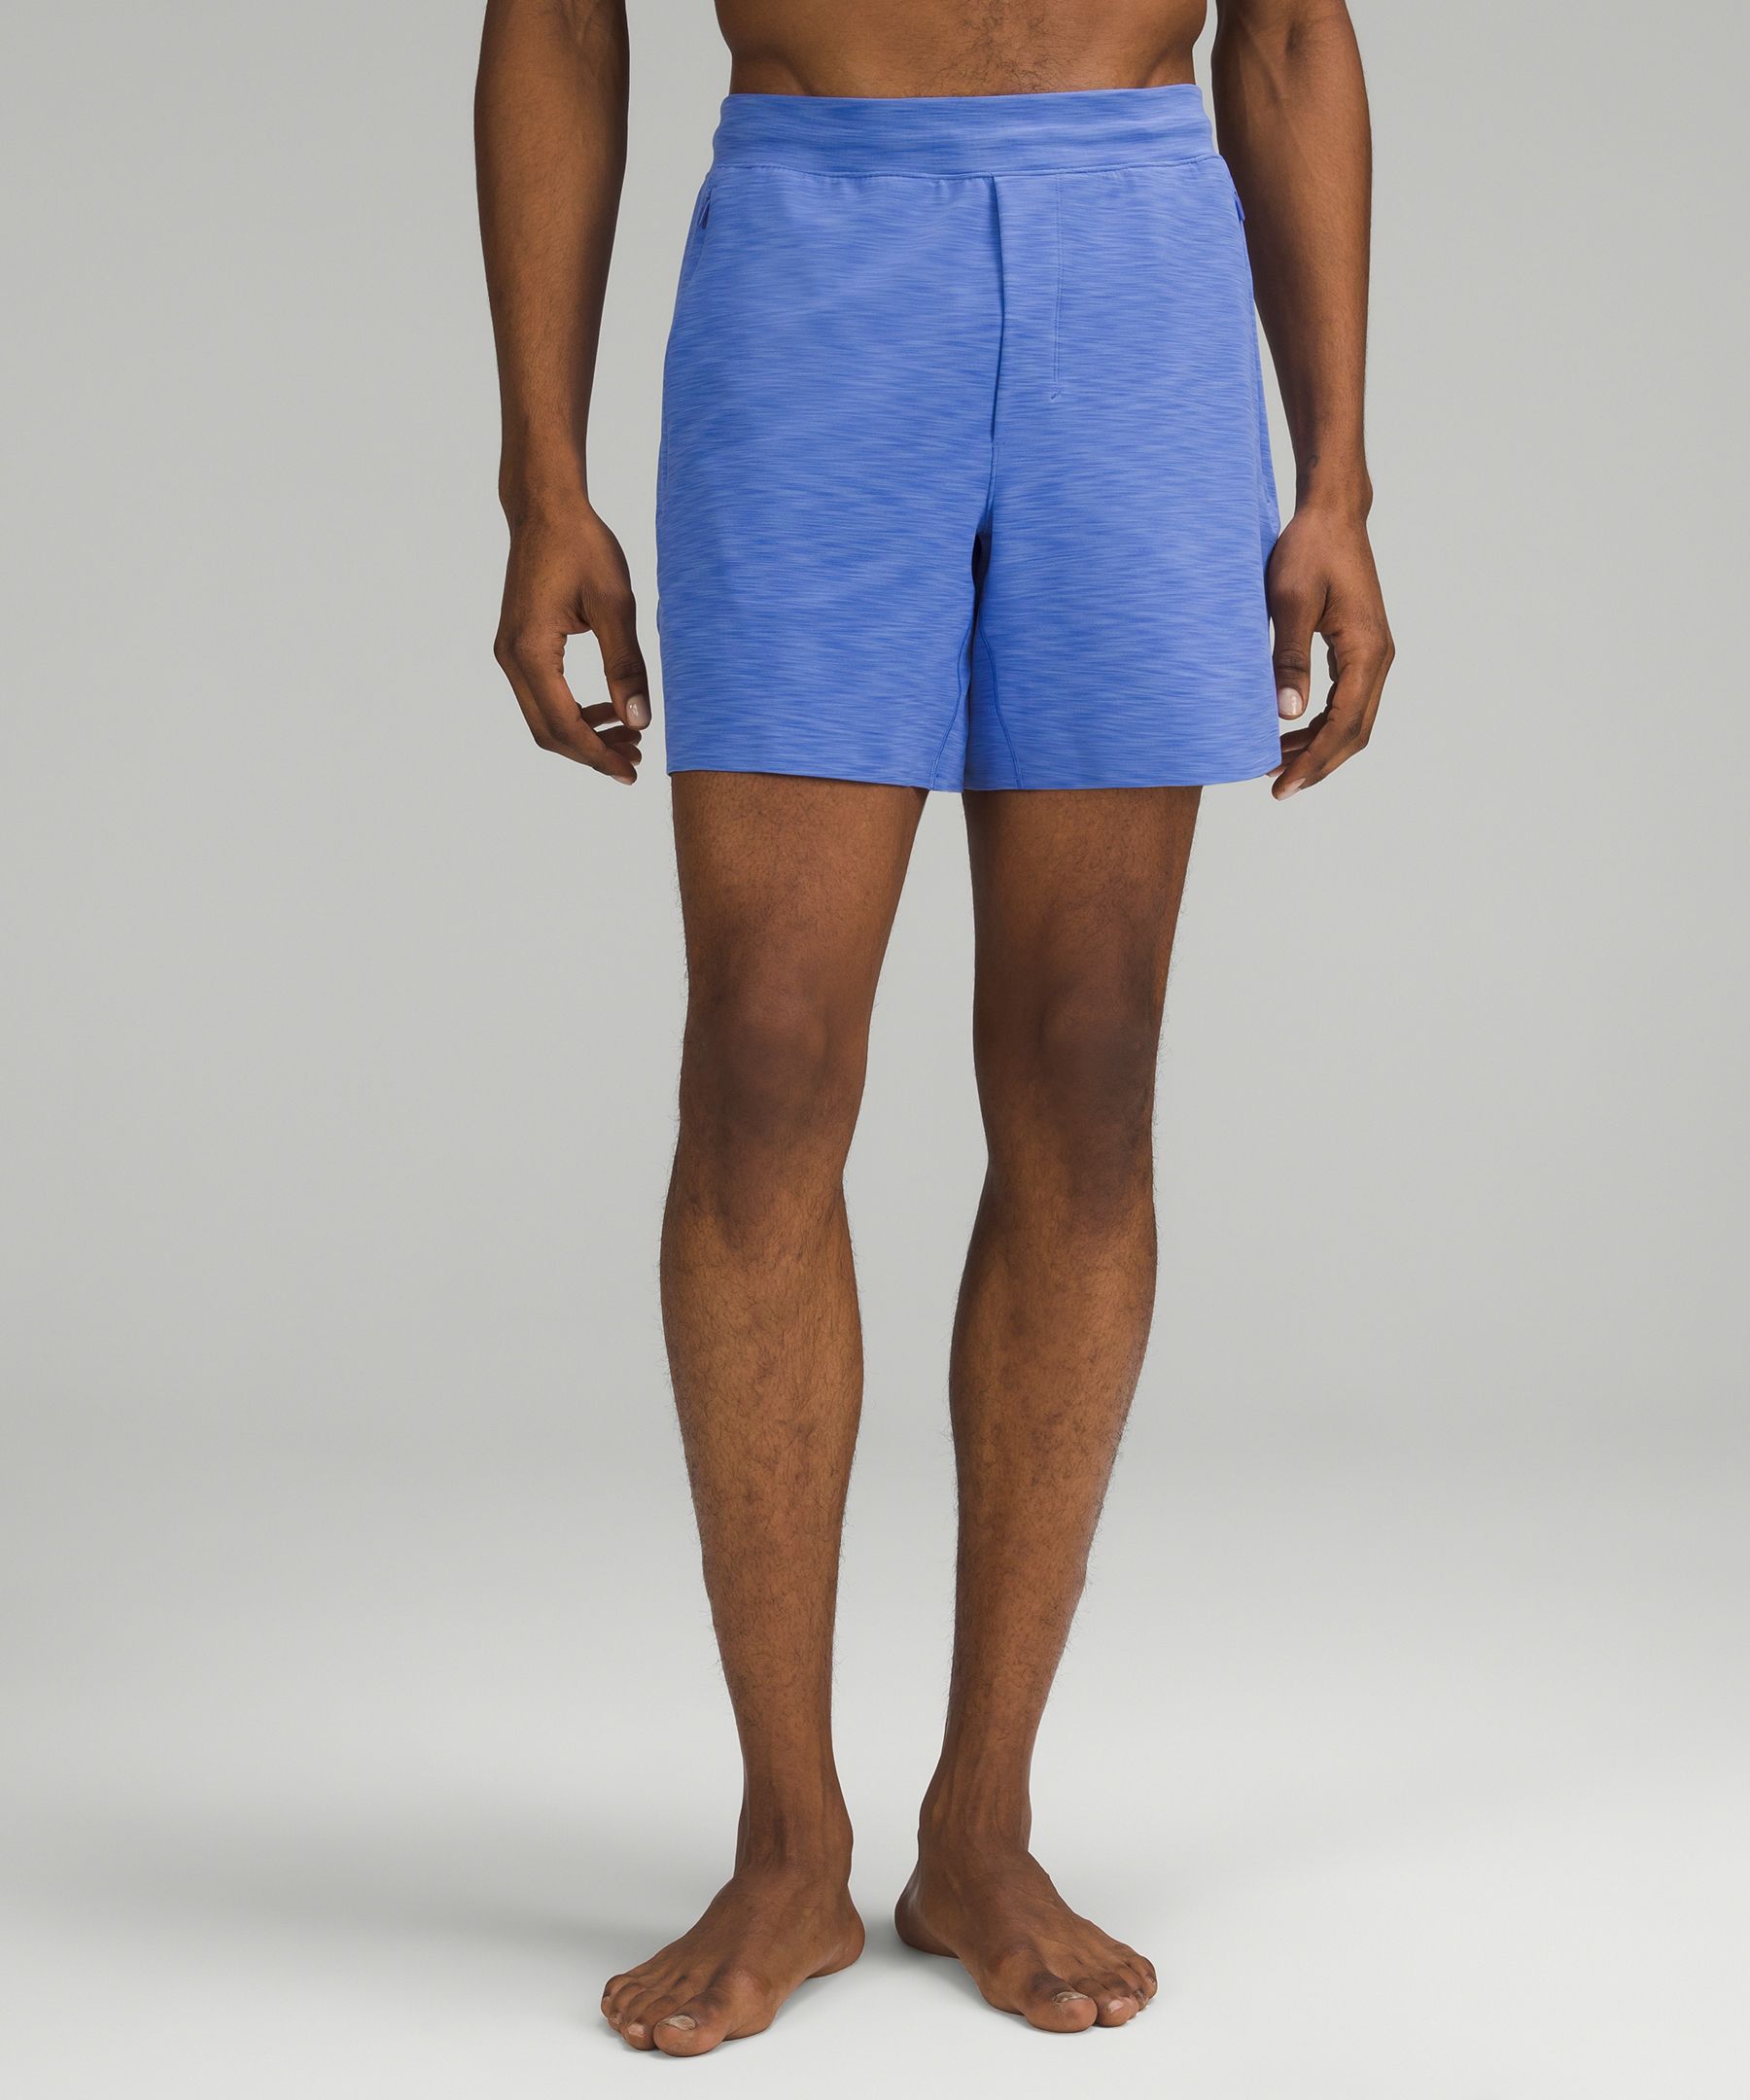 Balancer Short 6, Men's Shorts, lululemon